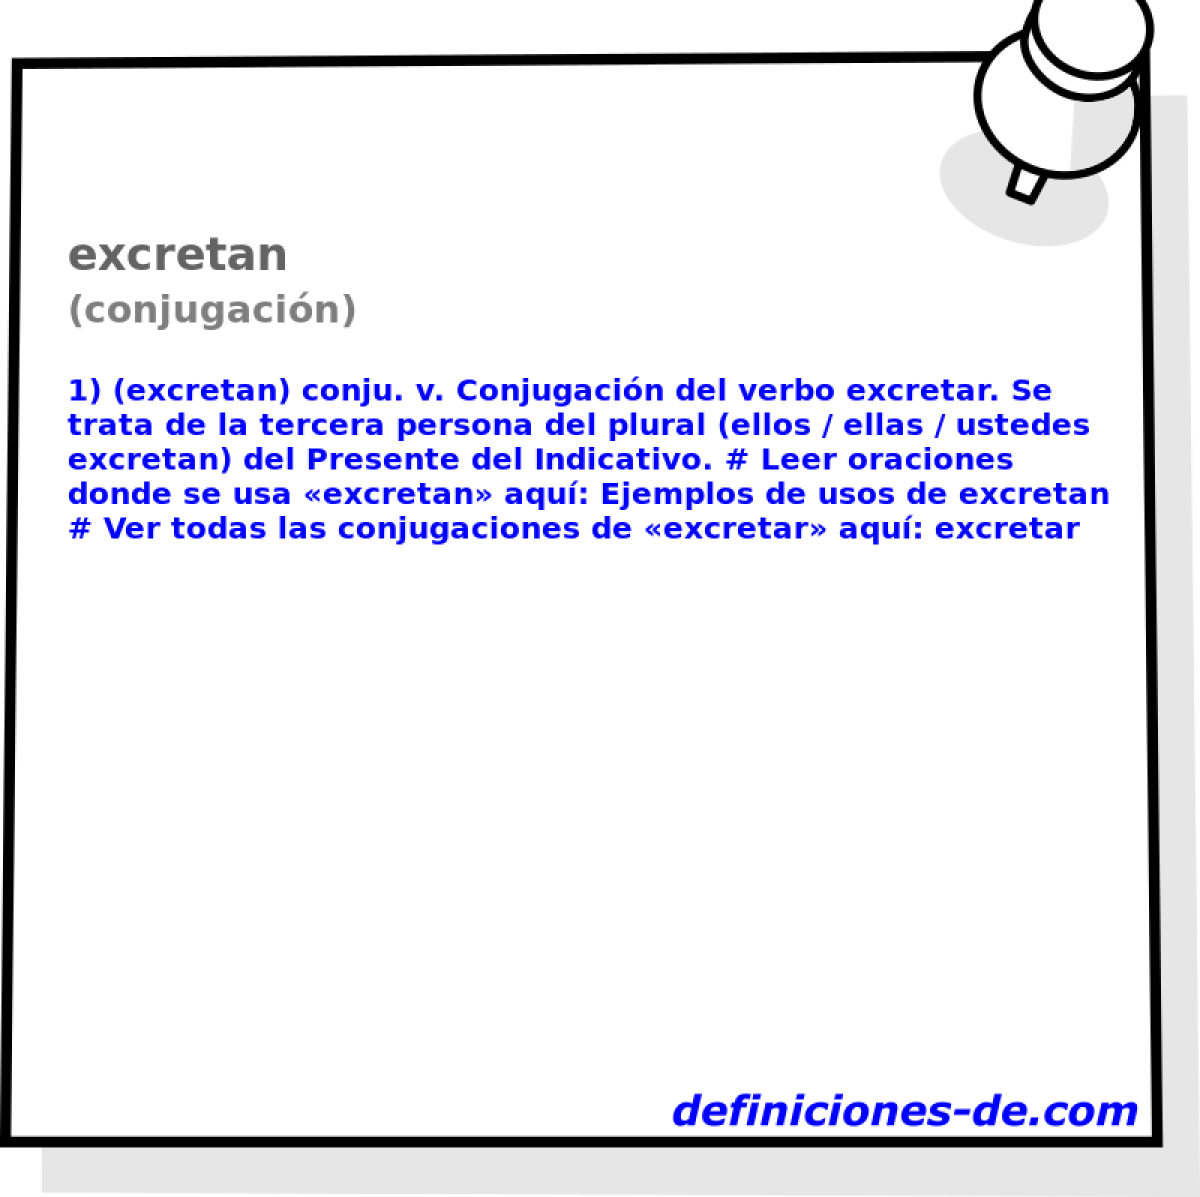 excretan (conjugacin)